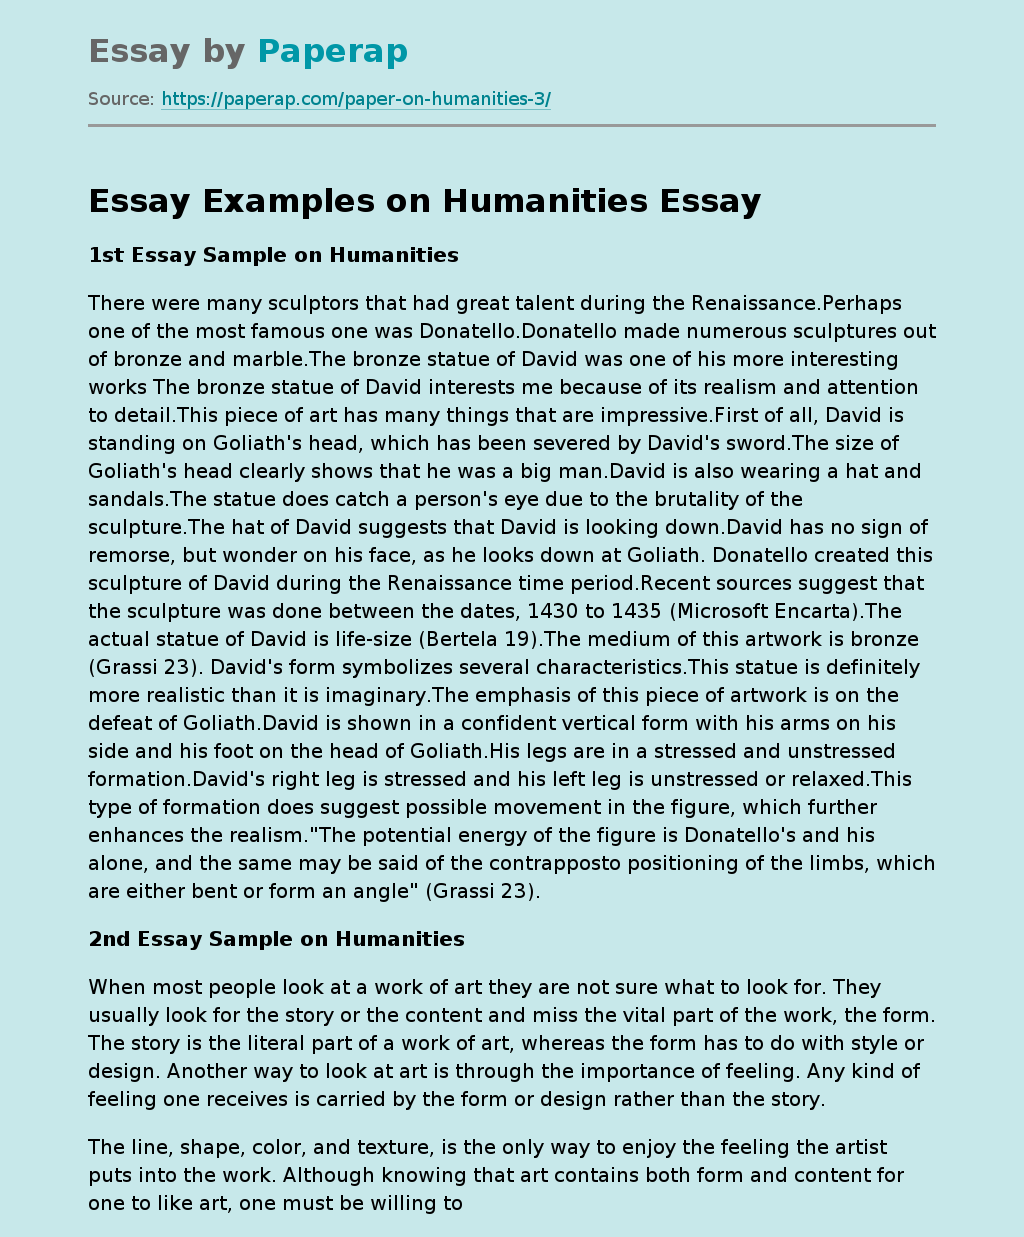 humanities essay intro